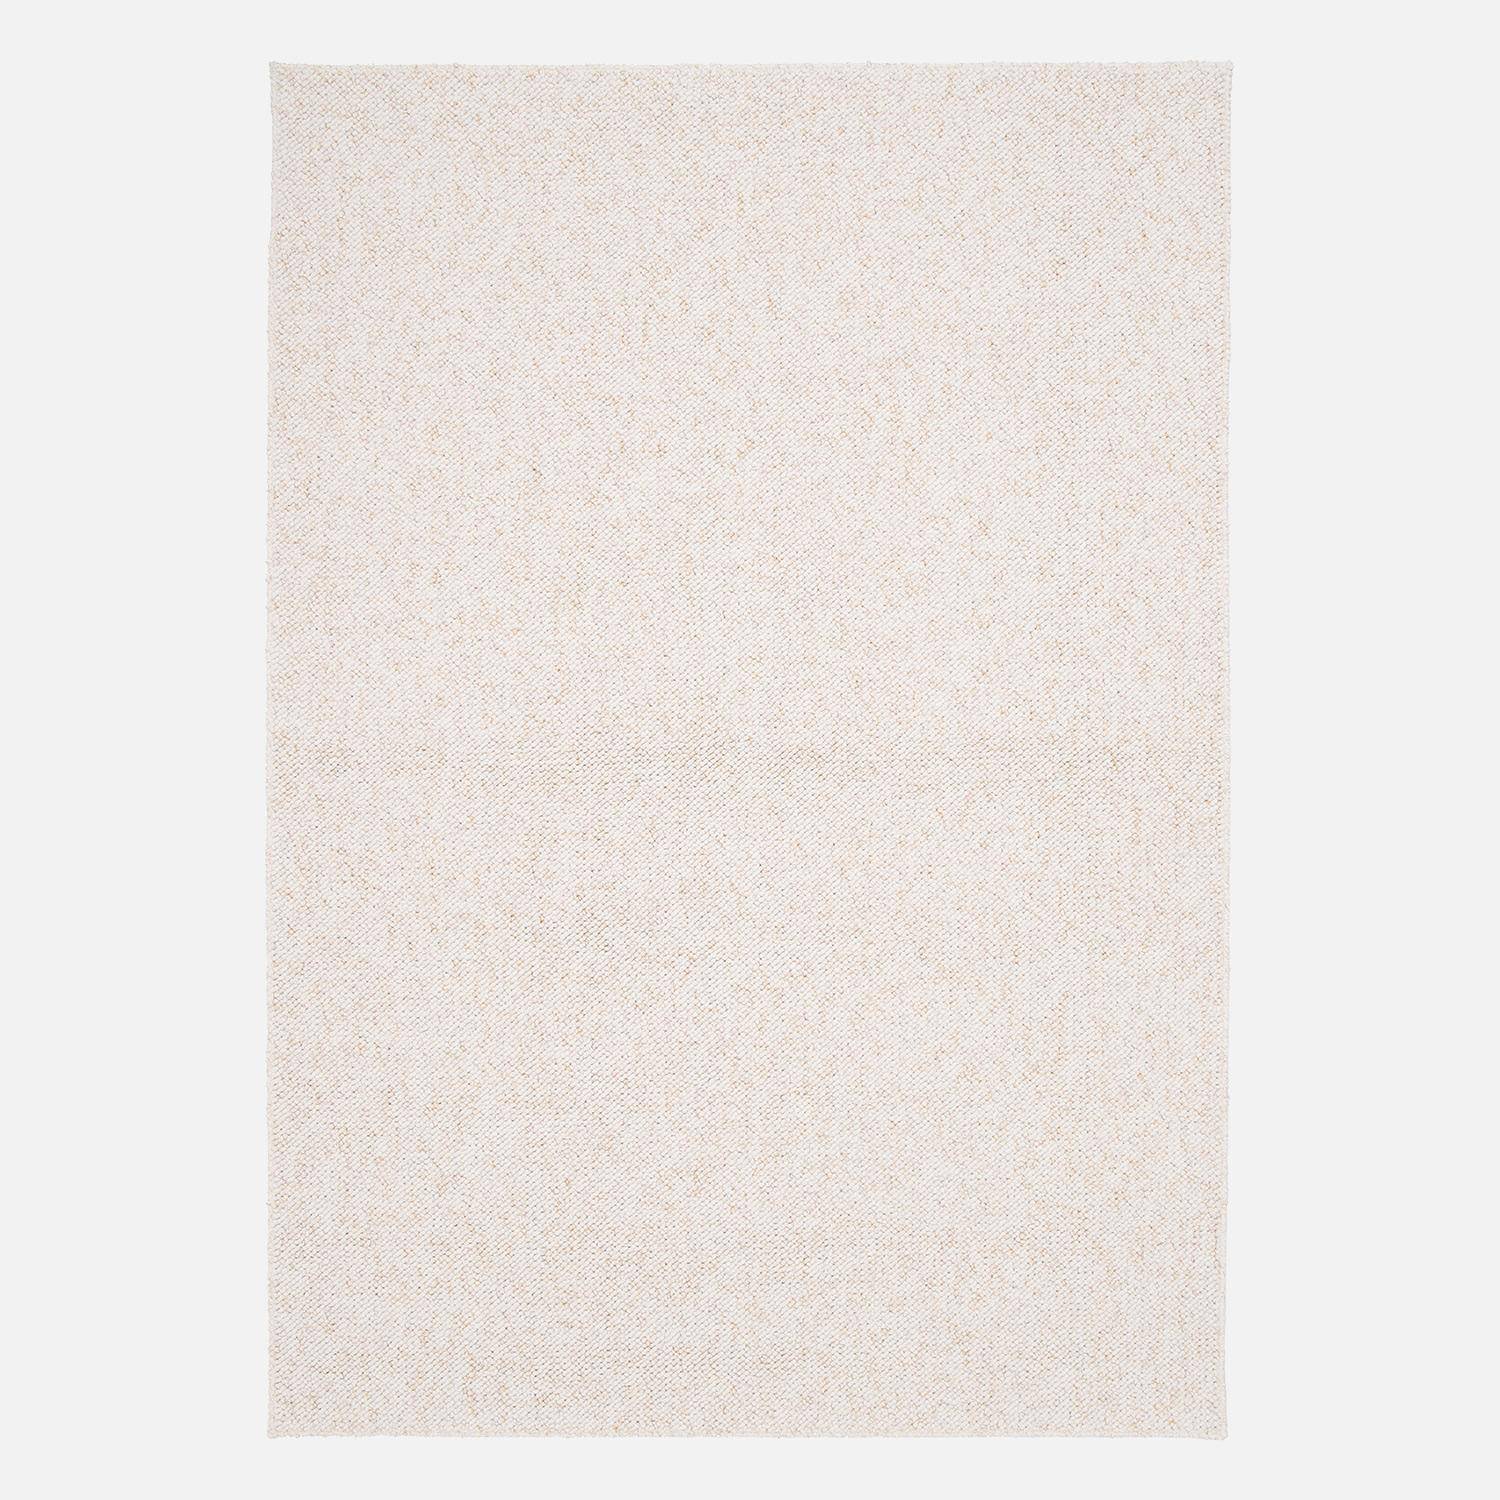 Cream mottled effect loop pile interior rug, Walter, 160 x 230 cm,sweeek,Photo1